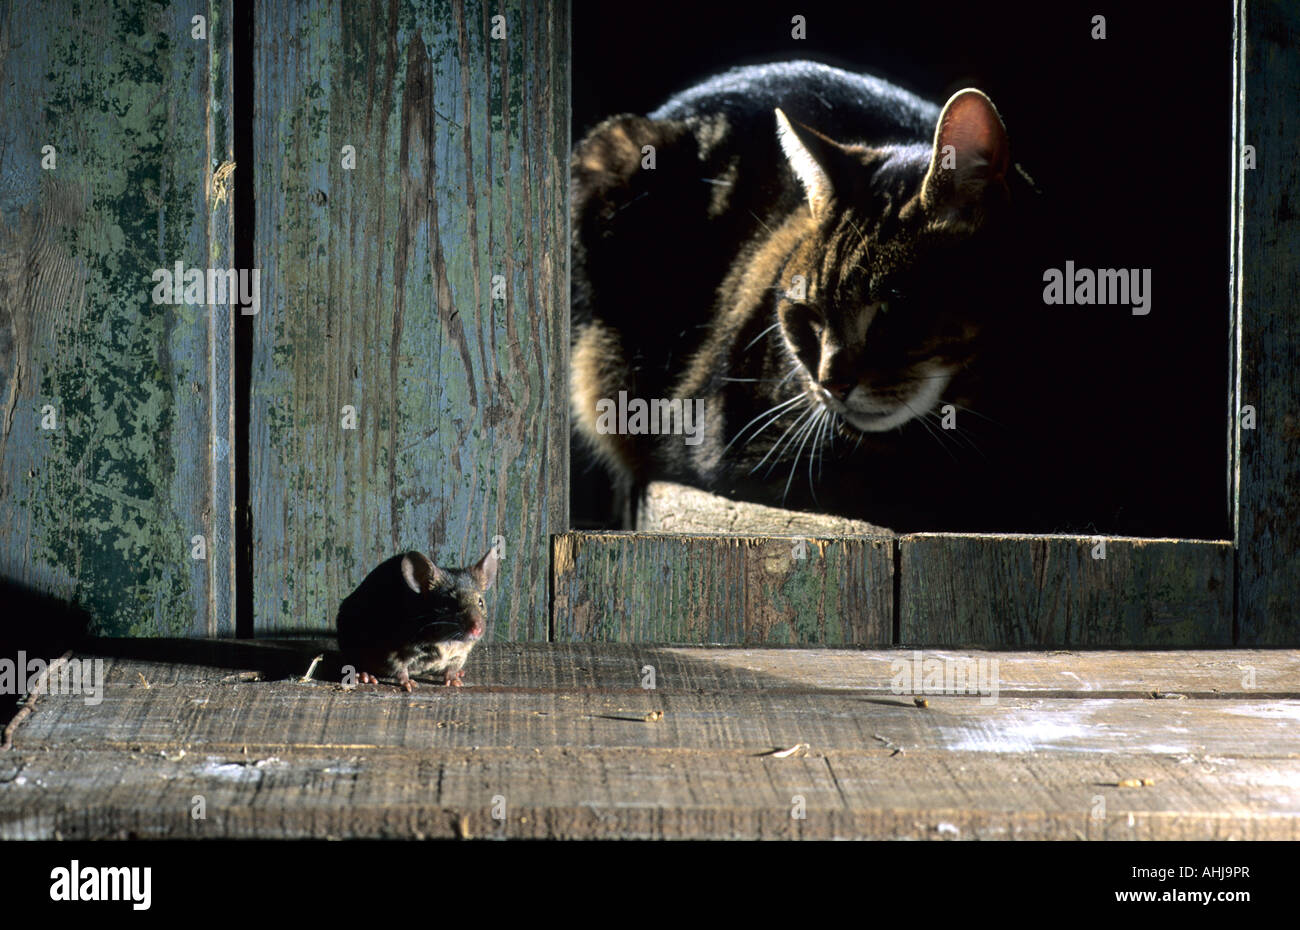 Katze lauernd vorne Maus cat lurking mouse in front Stock Photo